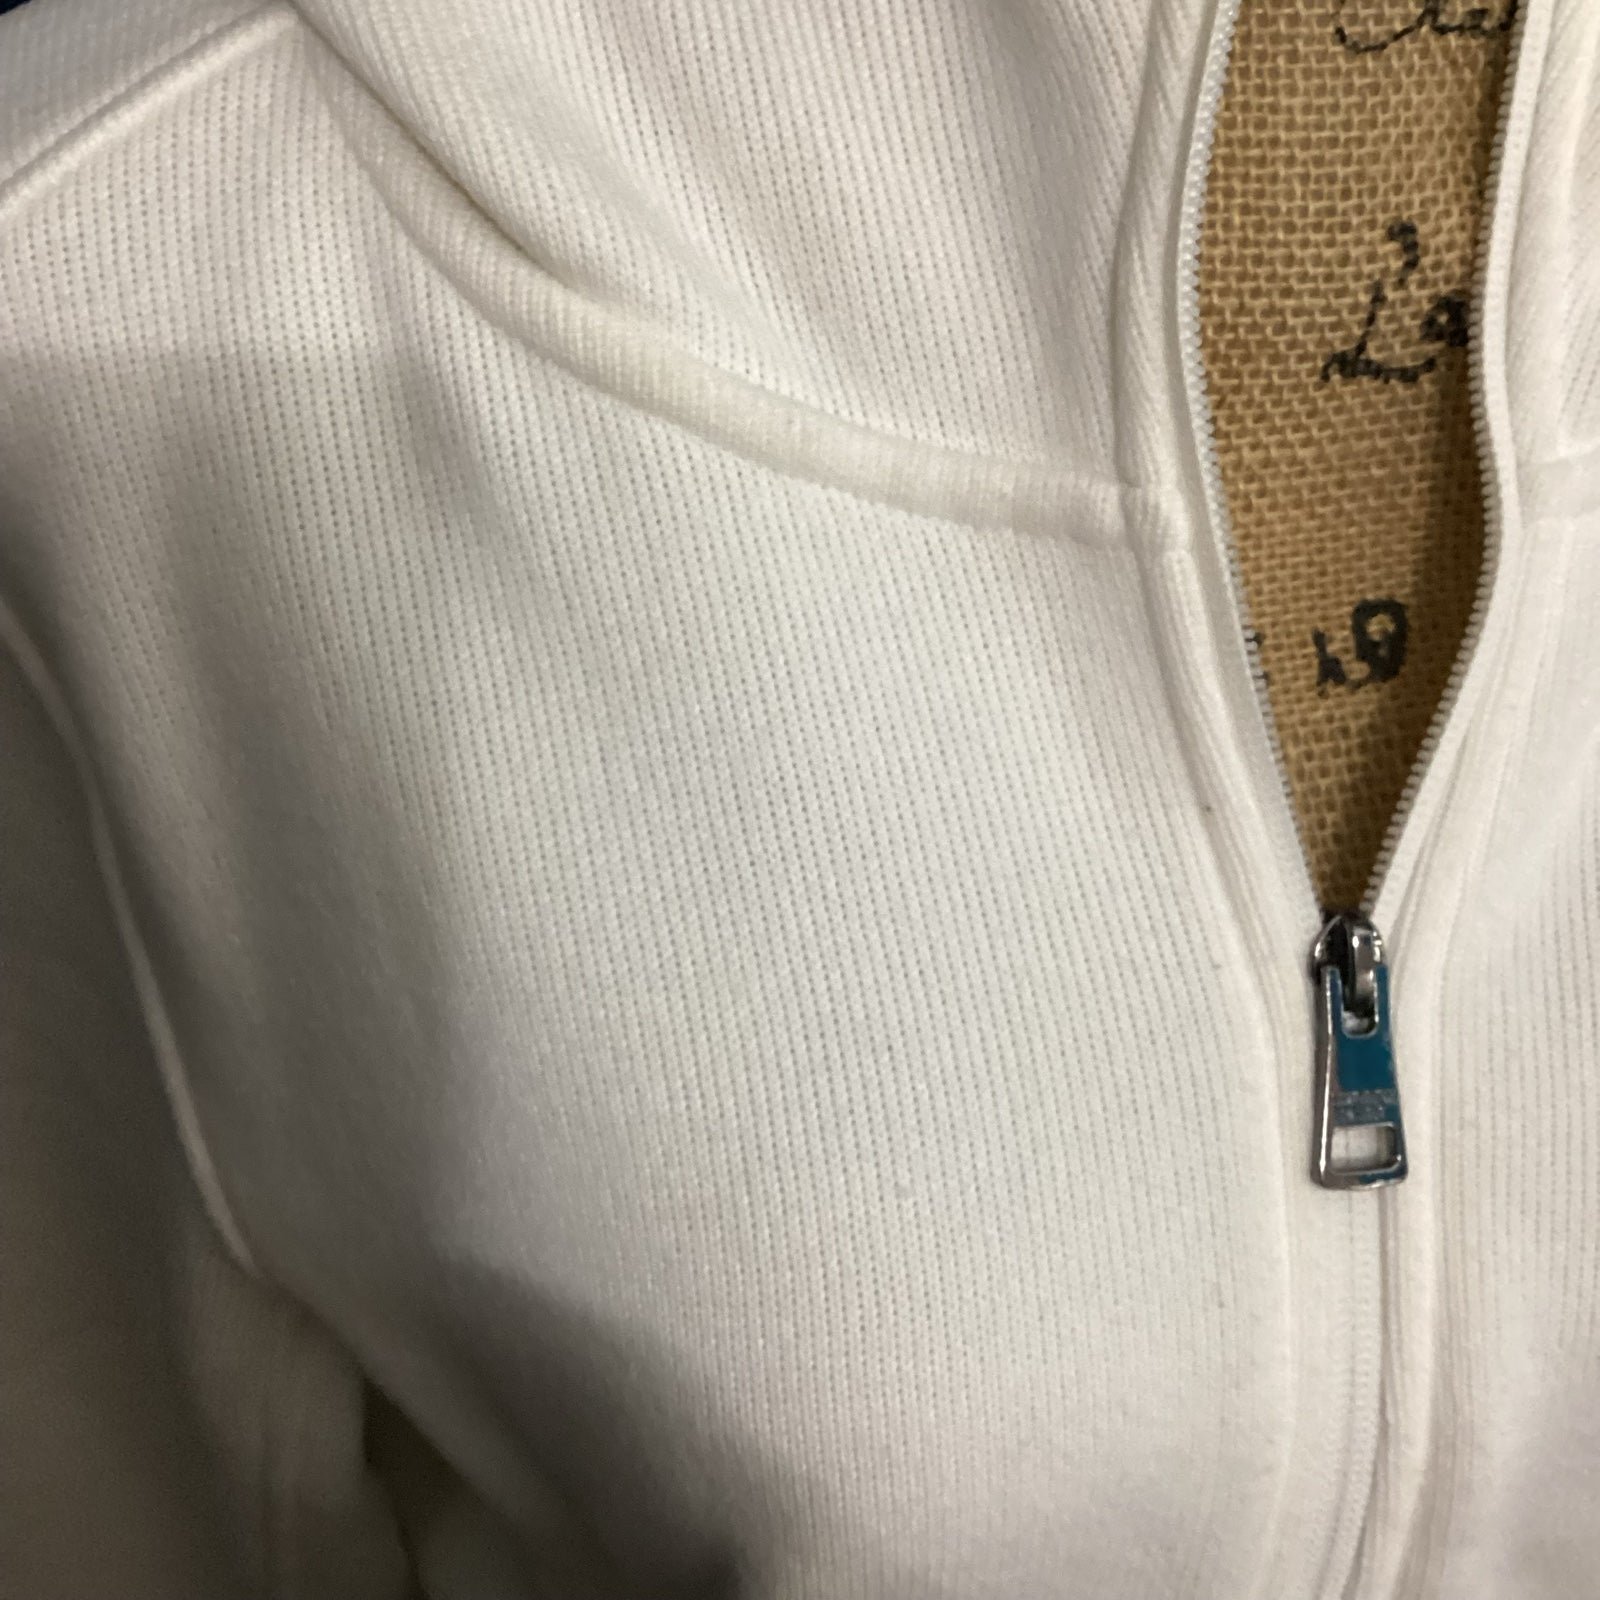 Popular Women’s Andrew Marc Sweater Jacket Zip Front Hoodie SZ XL White.   OW oDMTDfSK9 well sale